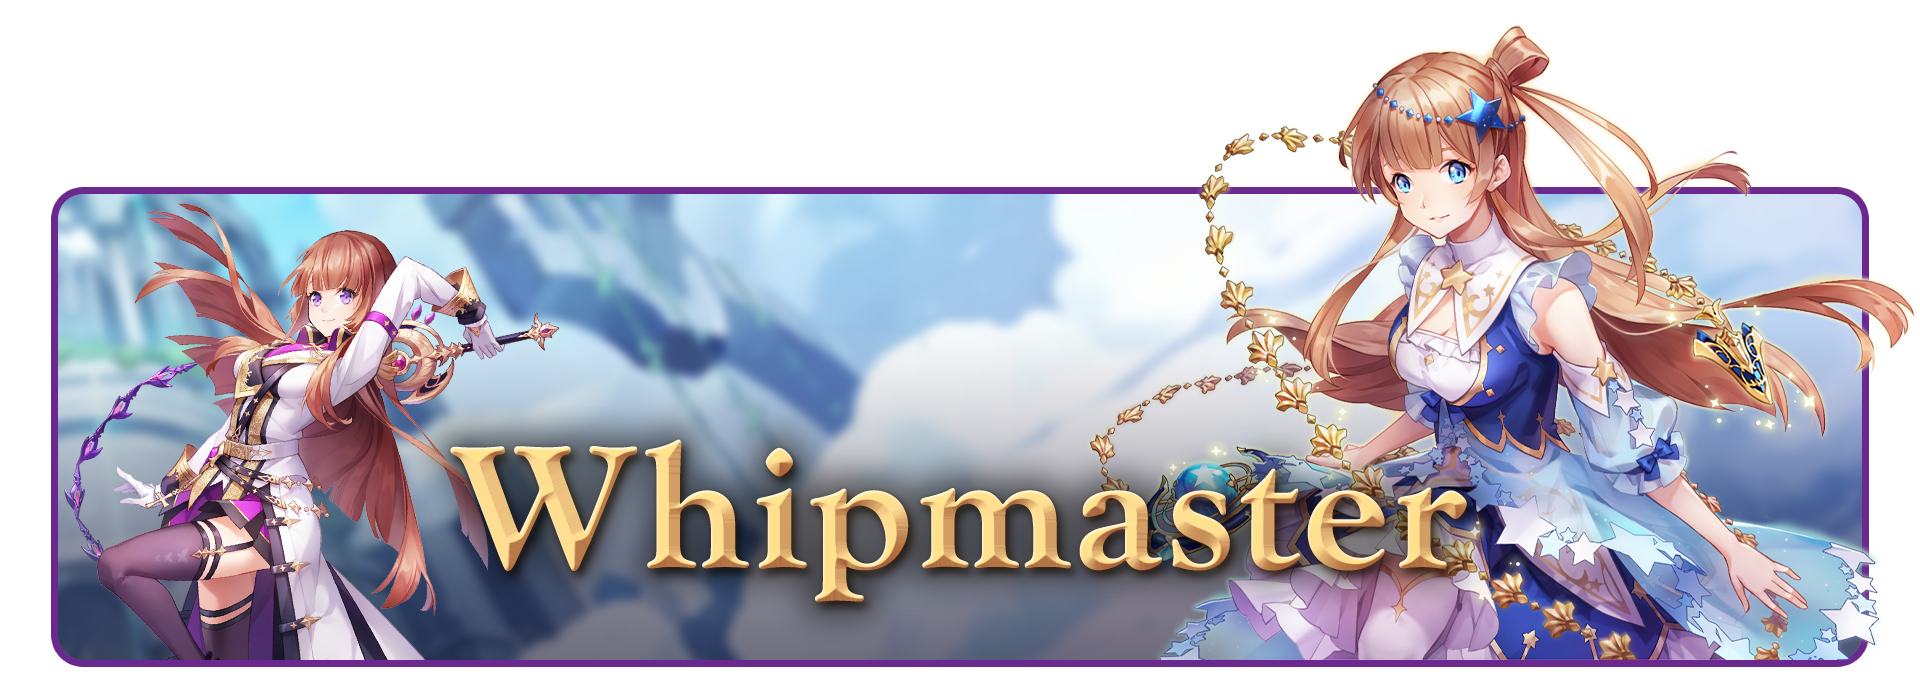 manual Obligatorio bolita Whipmaster - Patch 80 · Aura Kingdom update for 25 August 2021 · SteamDB